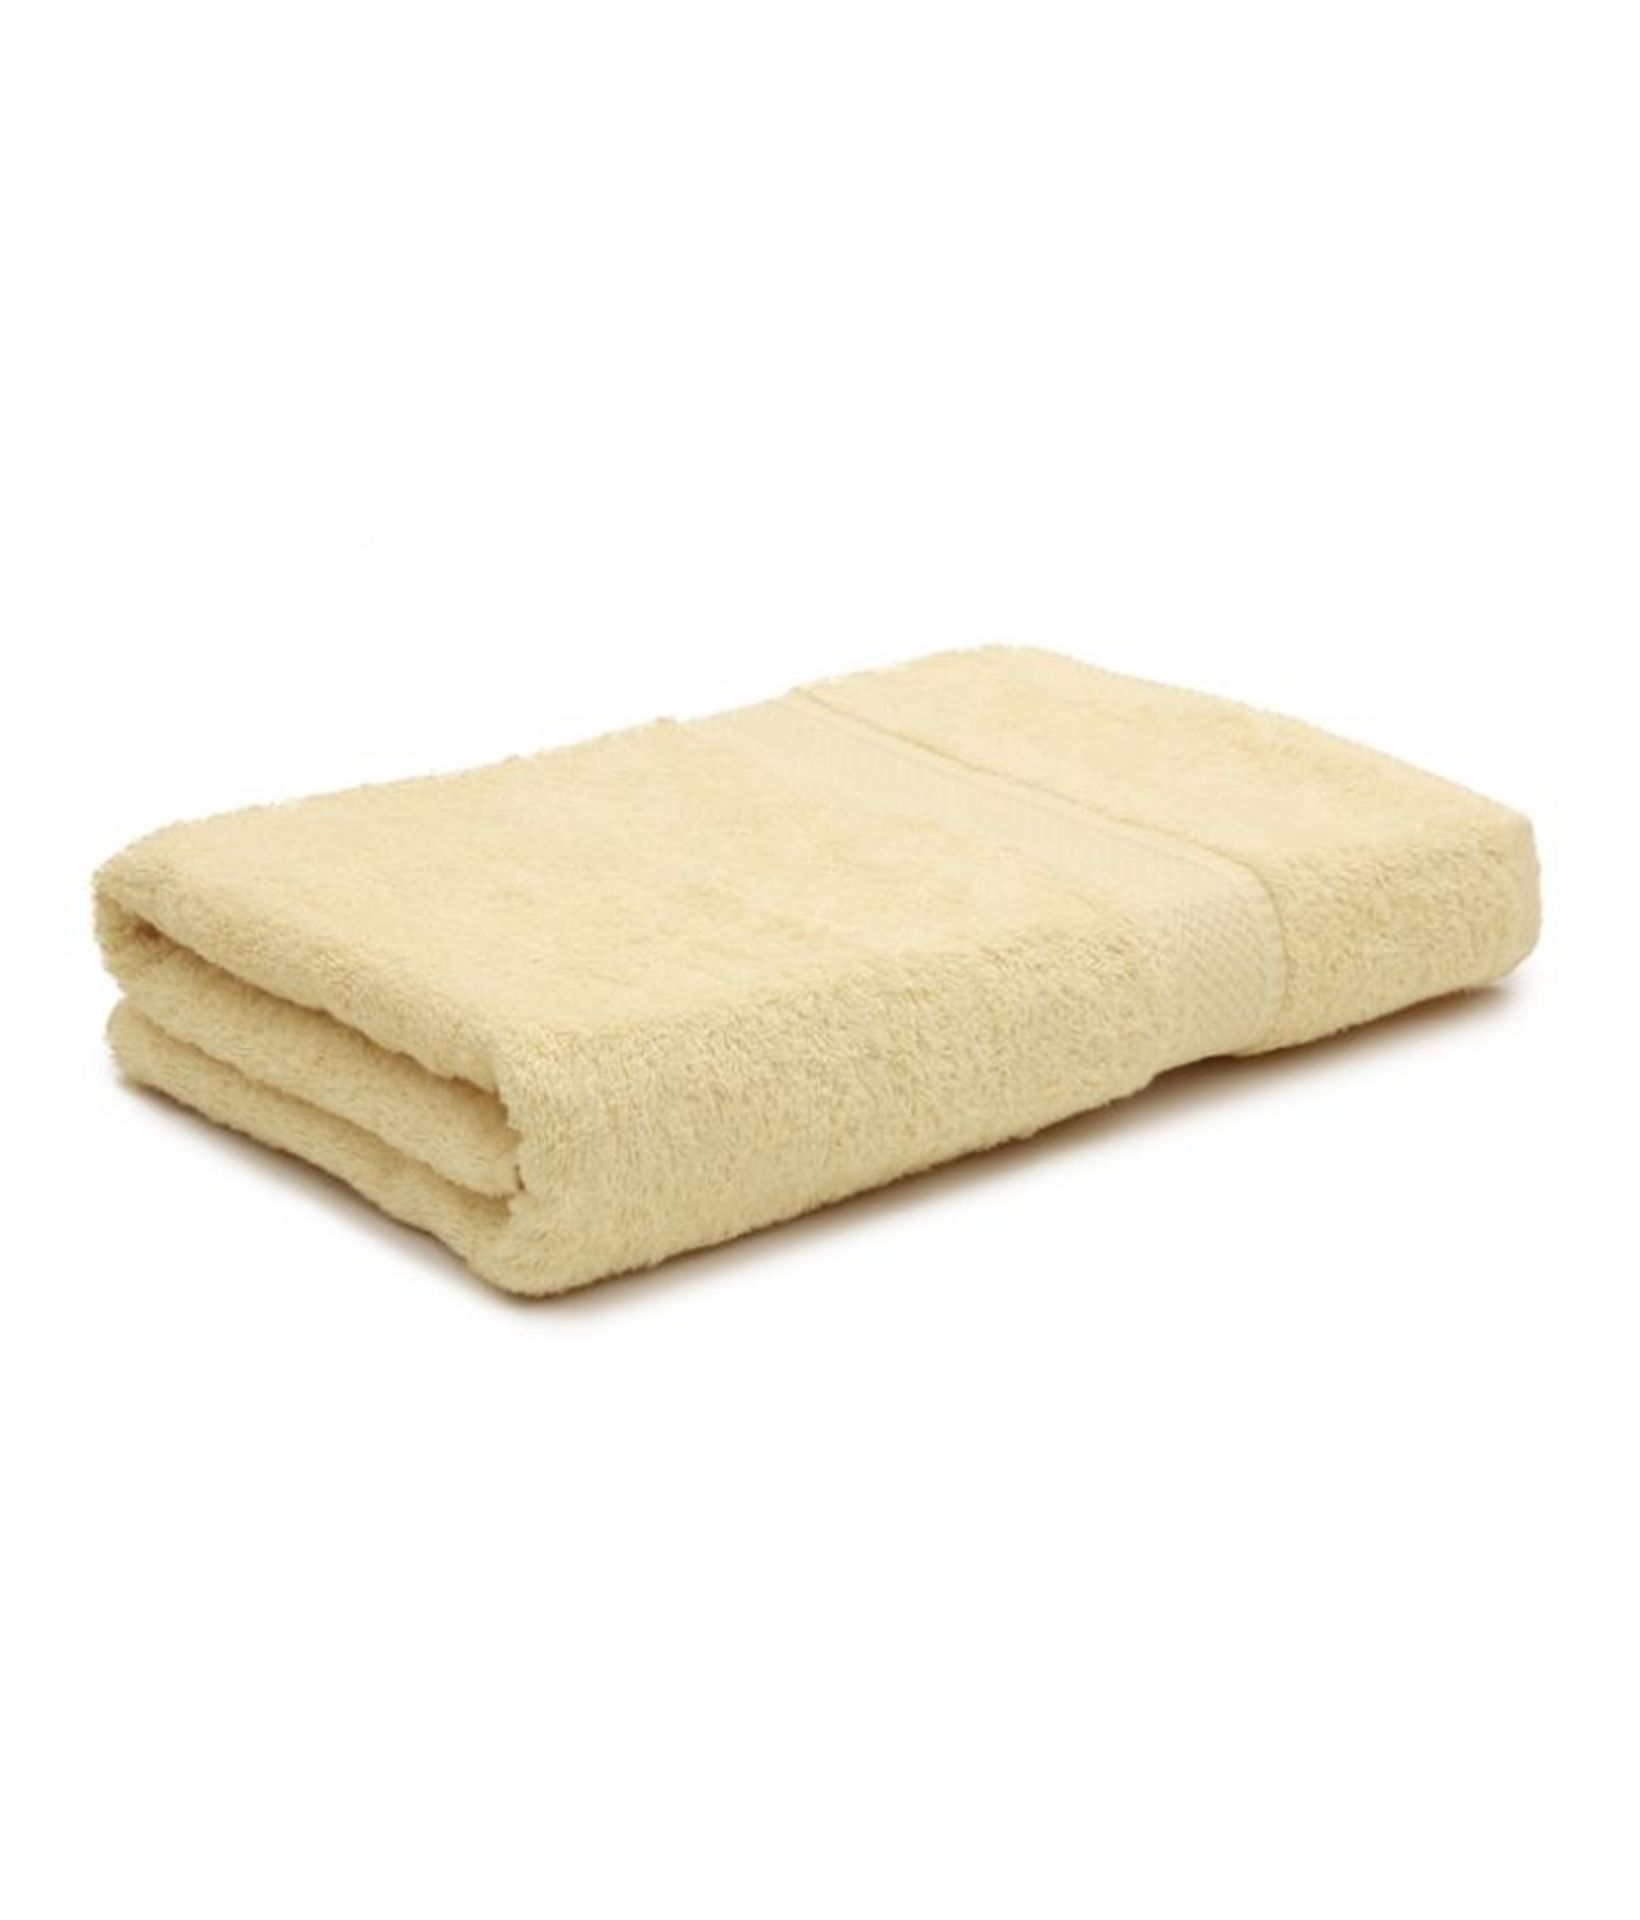 V *TRADE QTY* Brand New 100% Cotton Bath Towel 125 x 70 cm - Cream X 4 YOUR BID PRICE TO BE